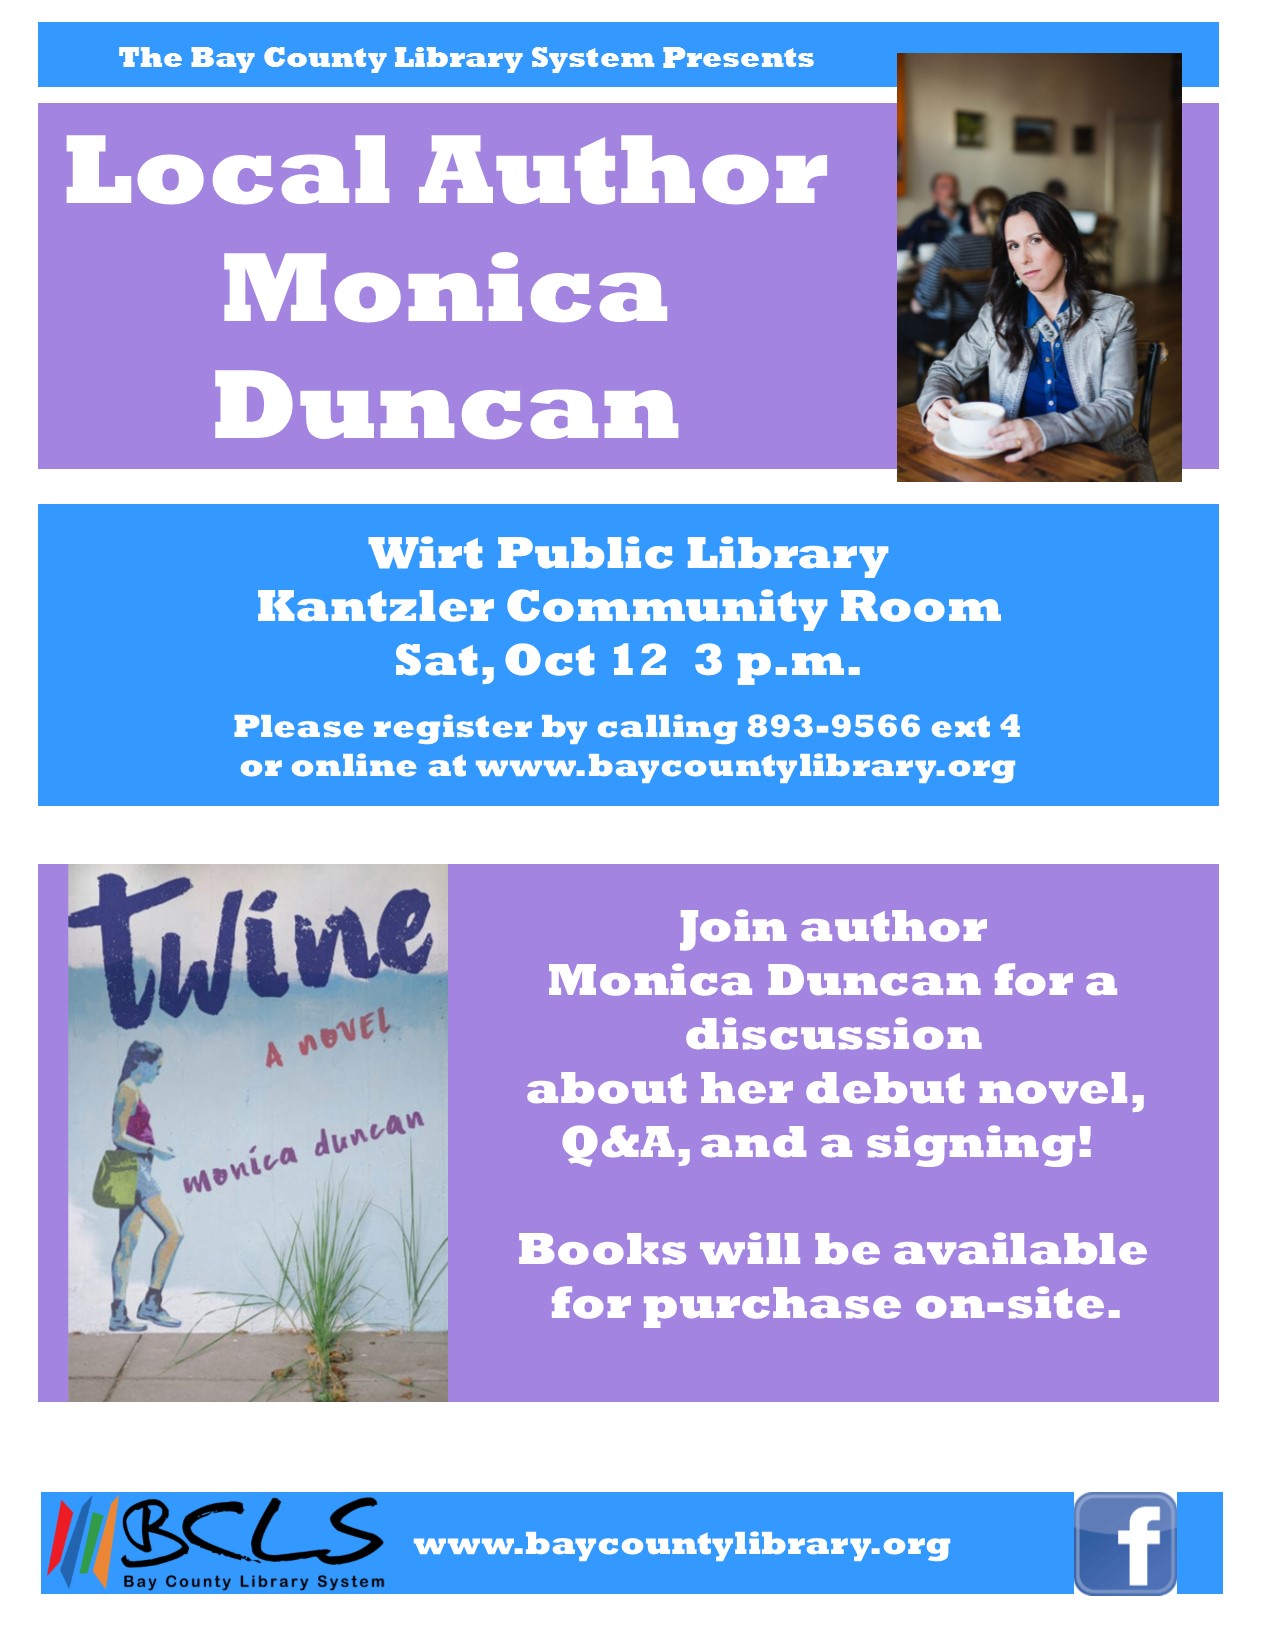 Image for "Local Author Monica Duncan program flyer"